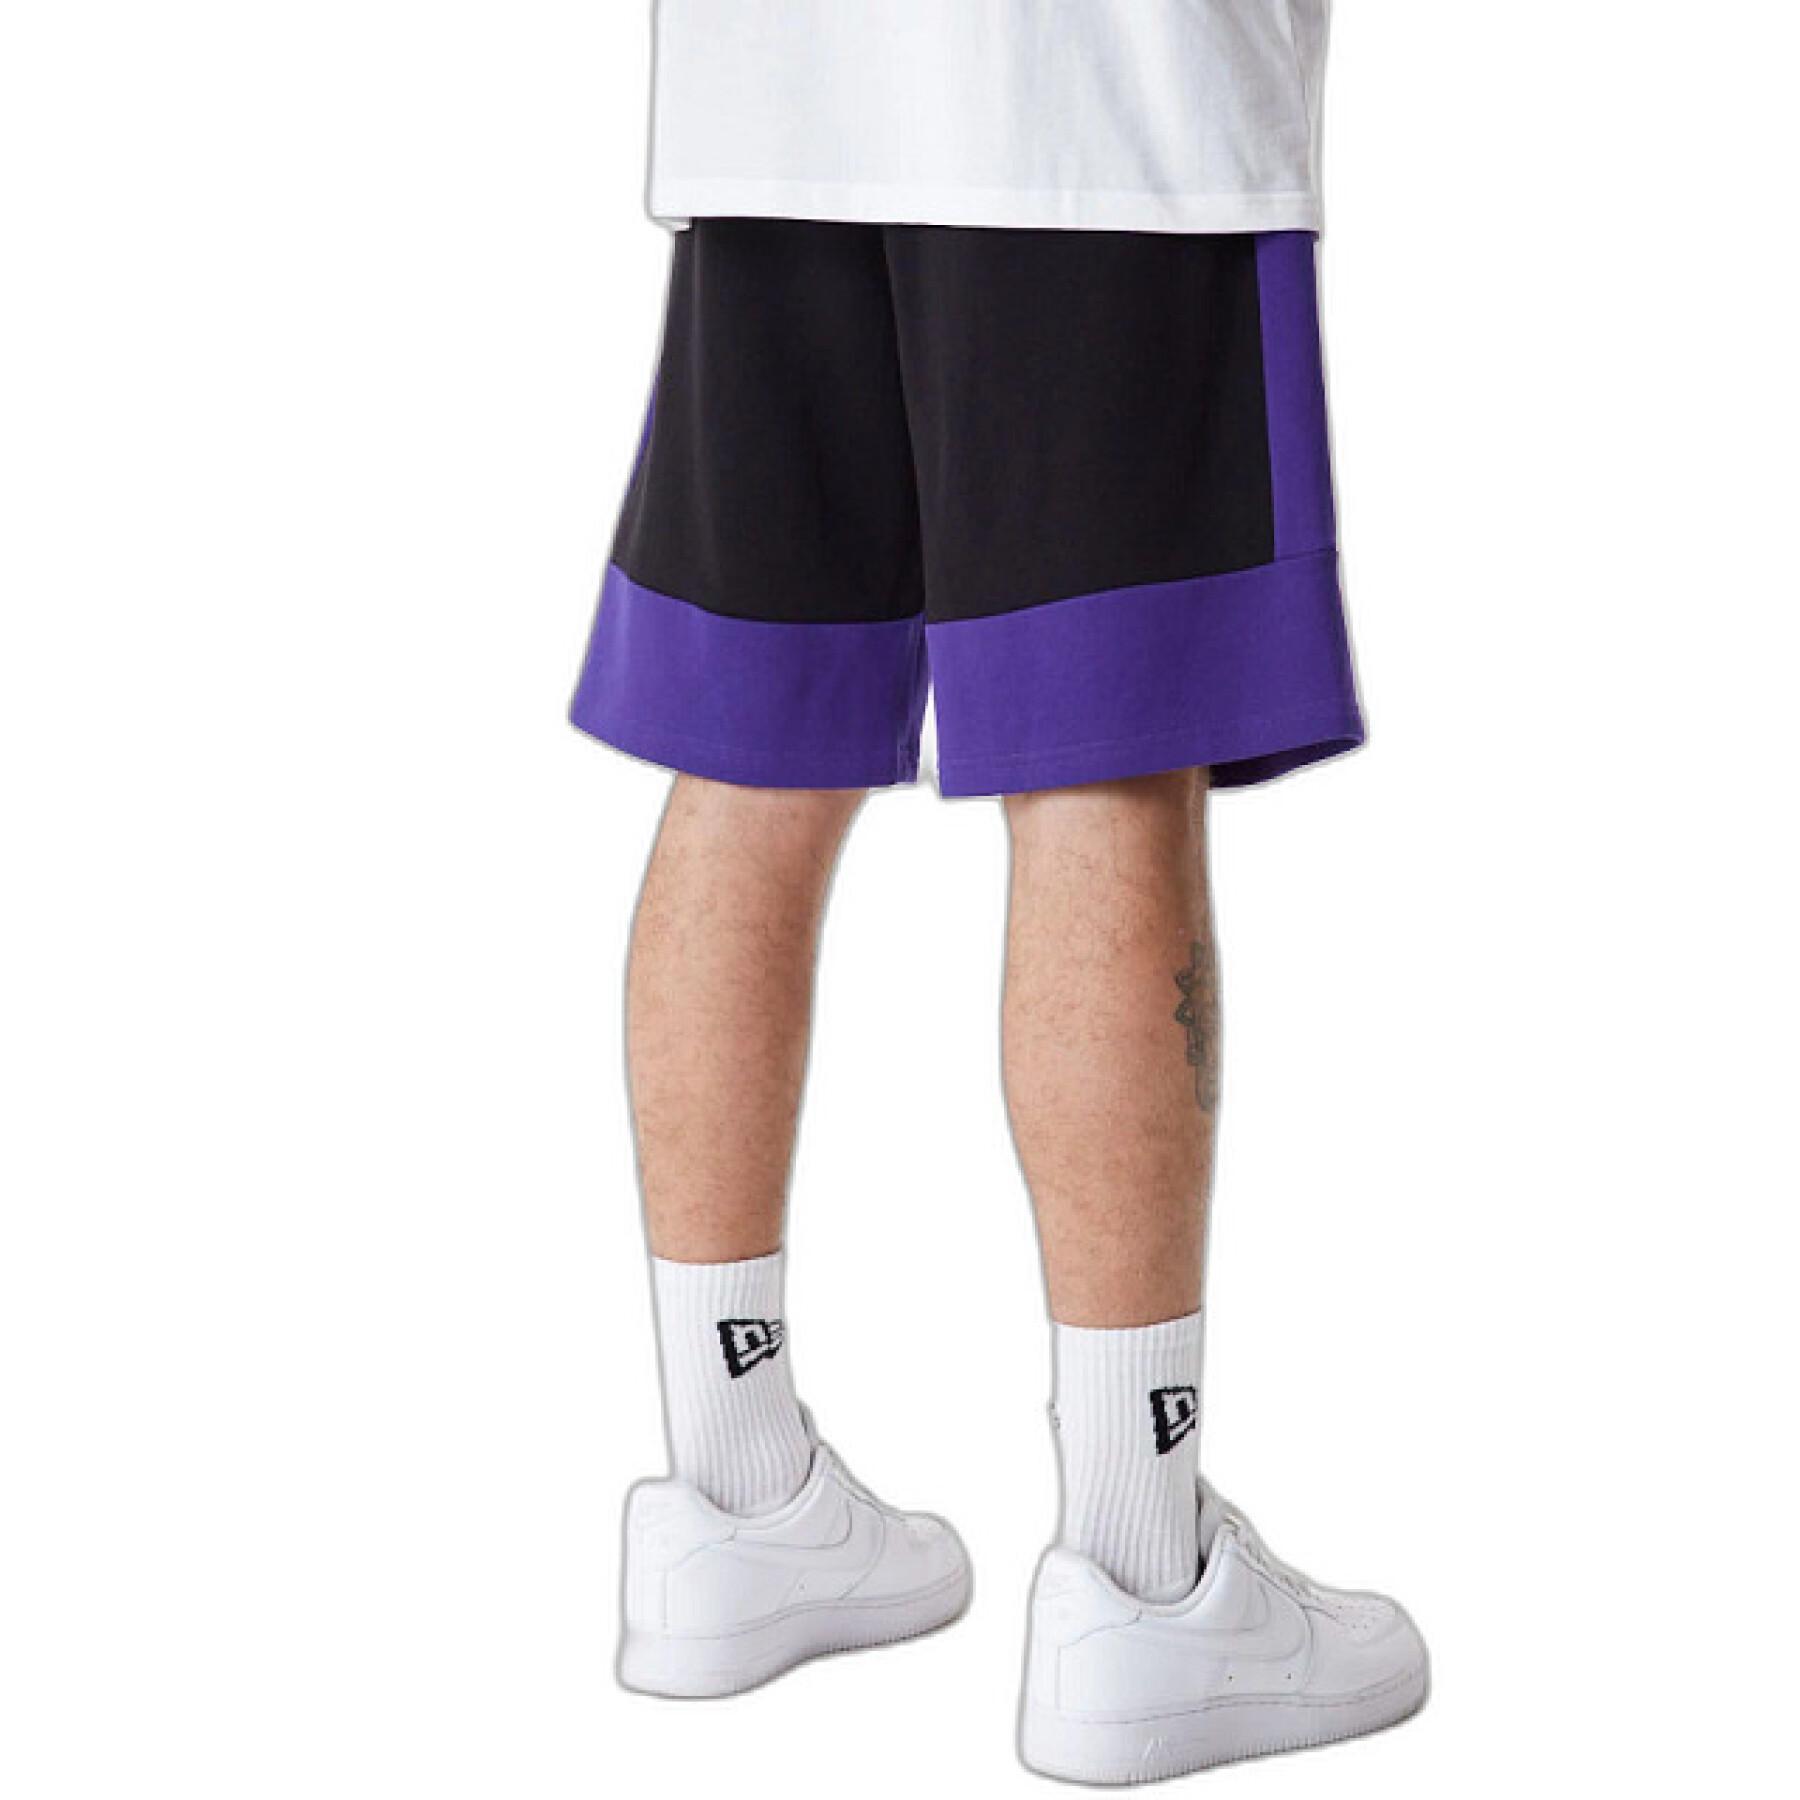 Pantaloncini colorati Los Angeles Lakers